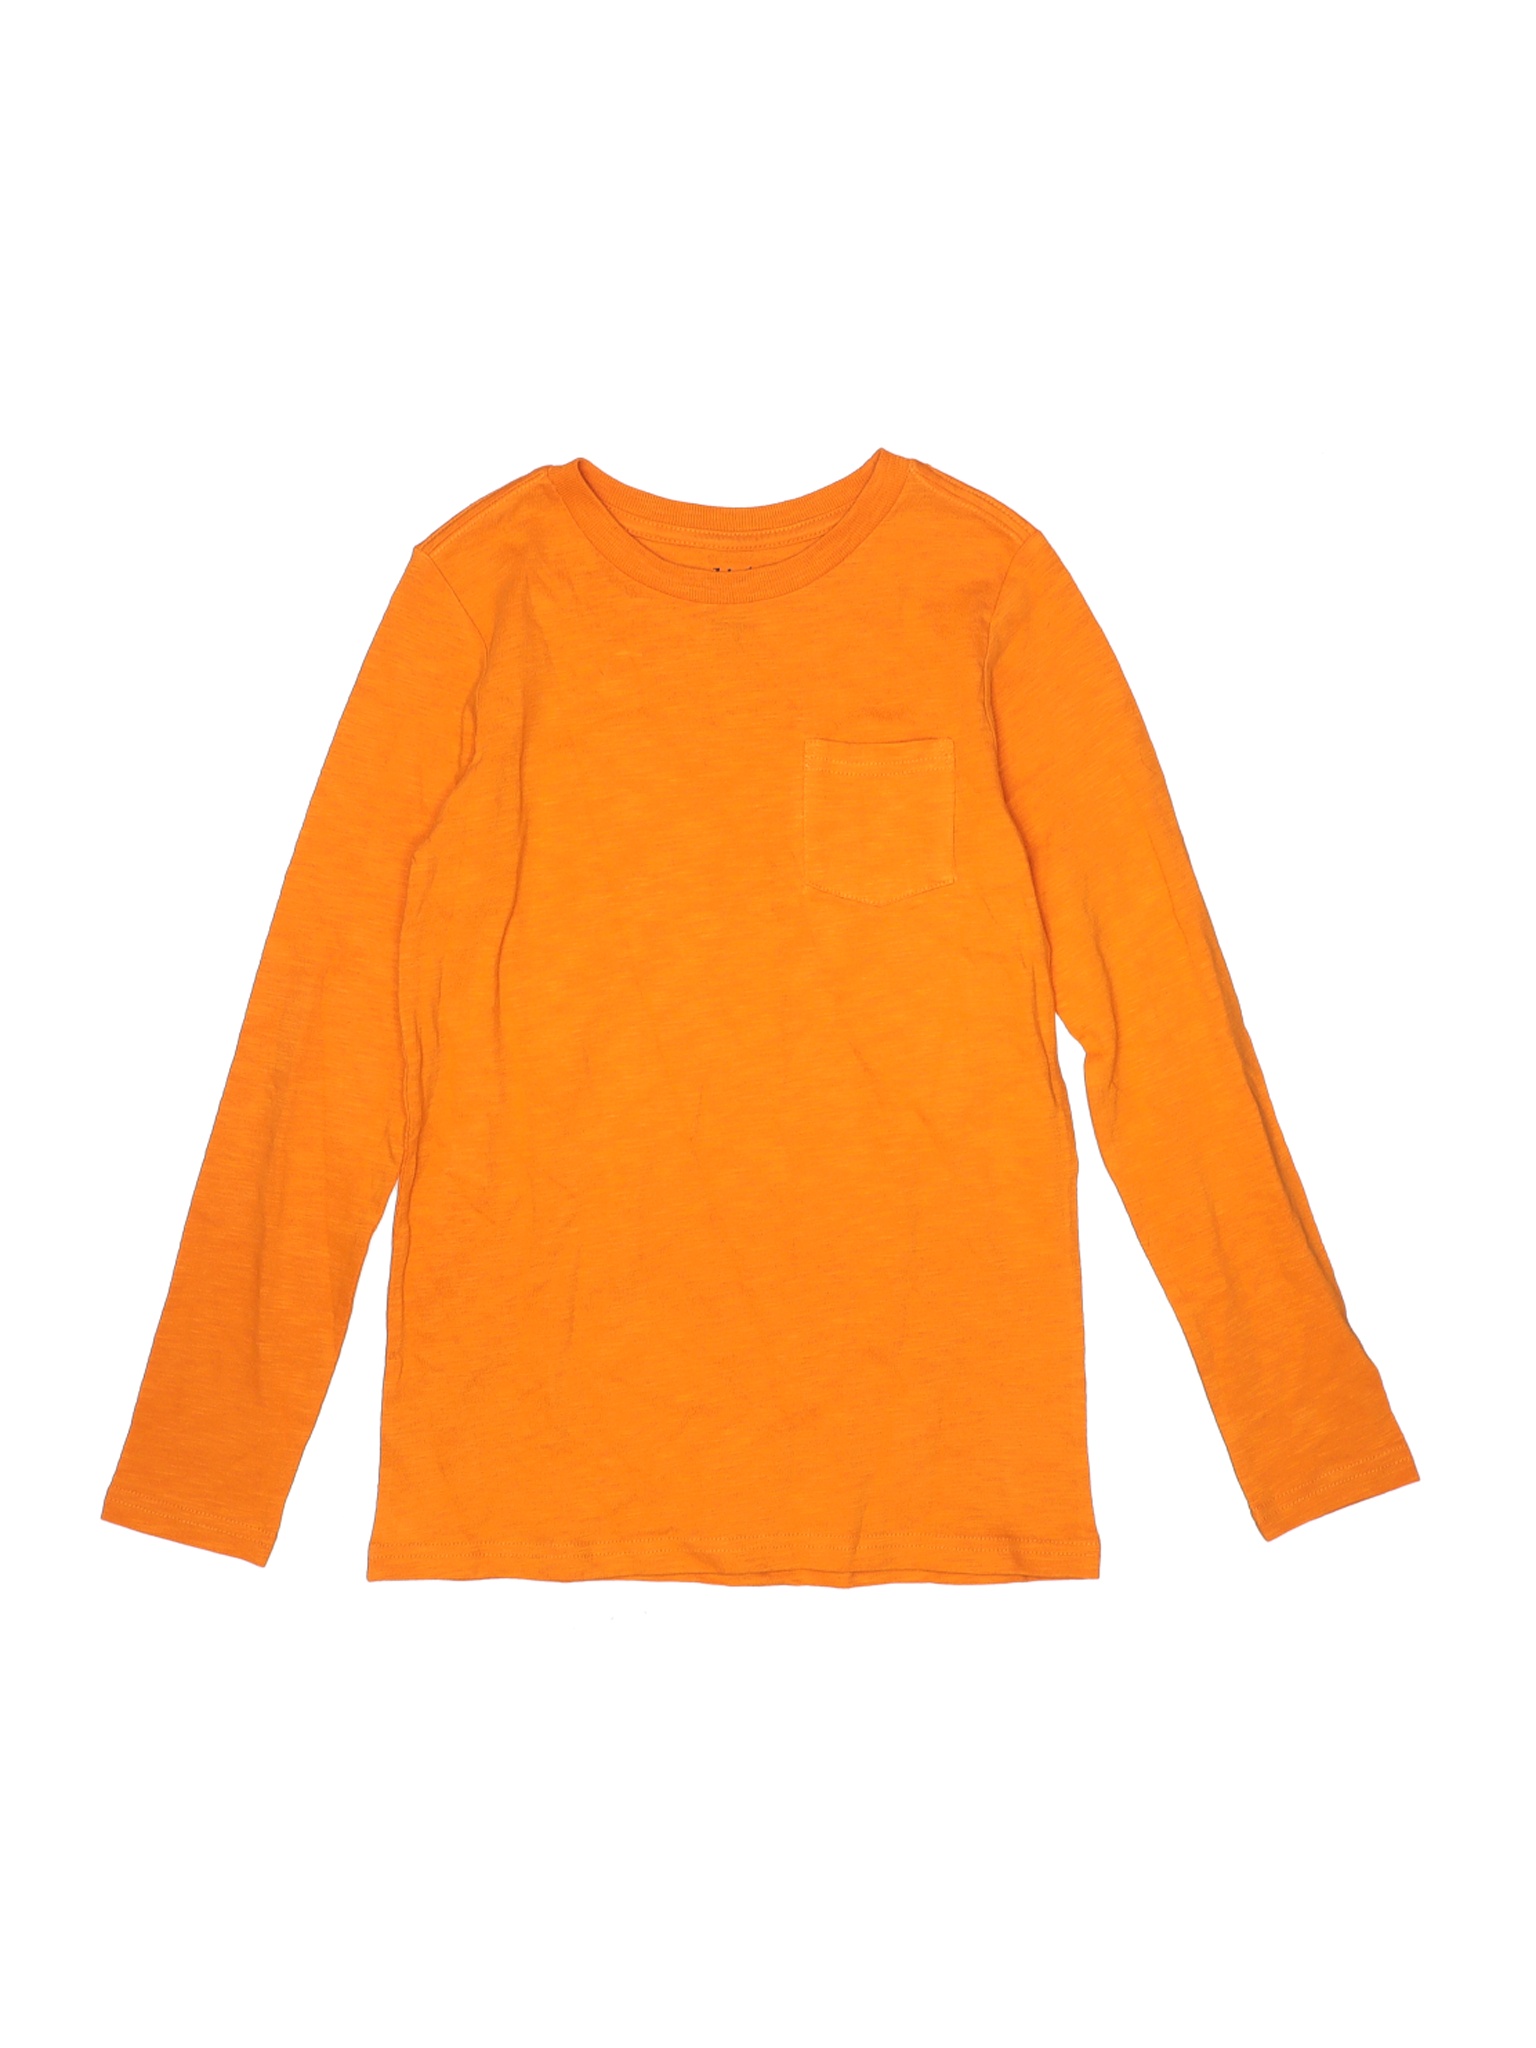 NWT Fab Kids Girls Orange Long Sleeve T-Shirt 8 | eBay